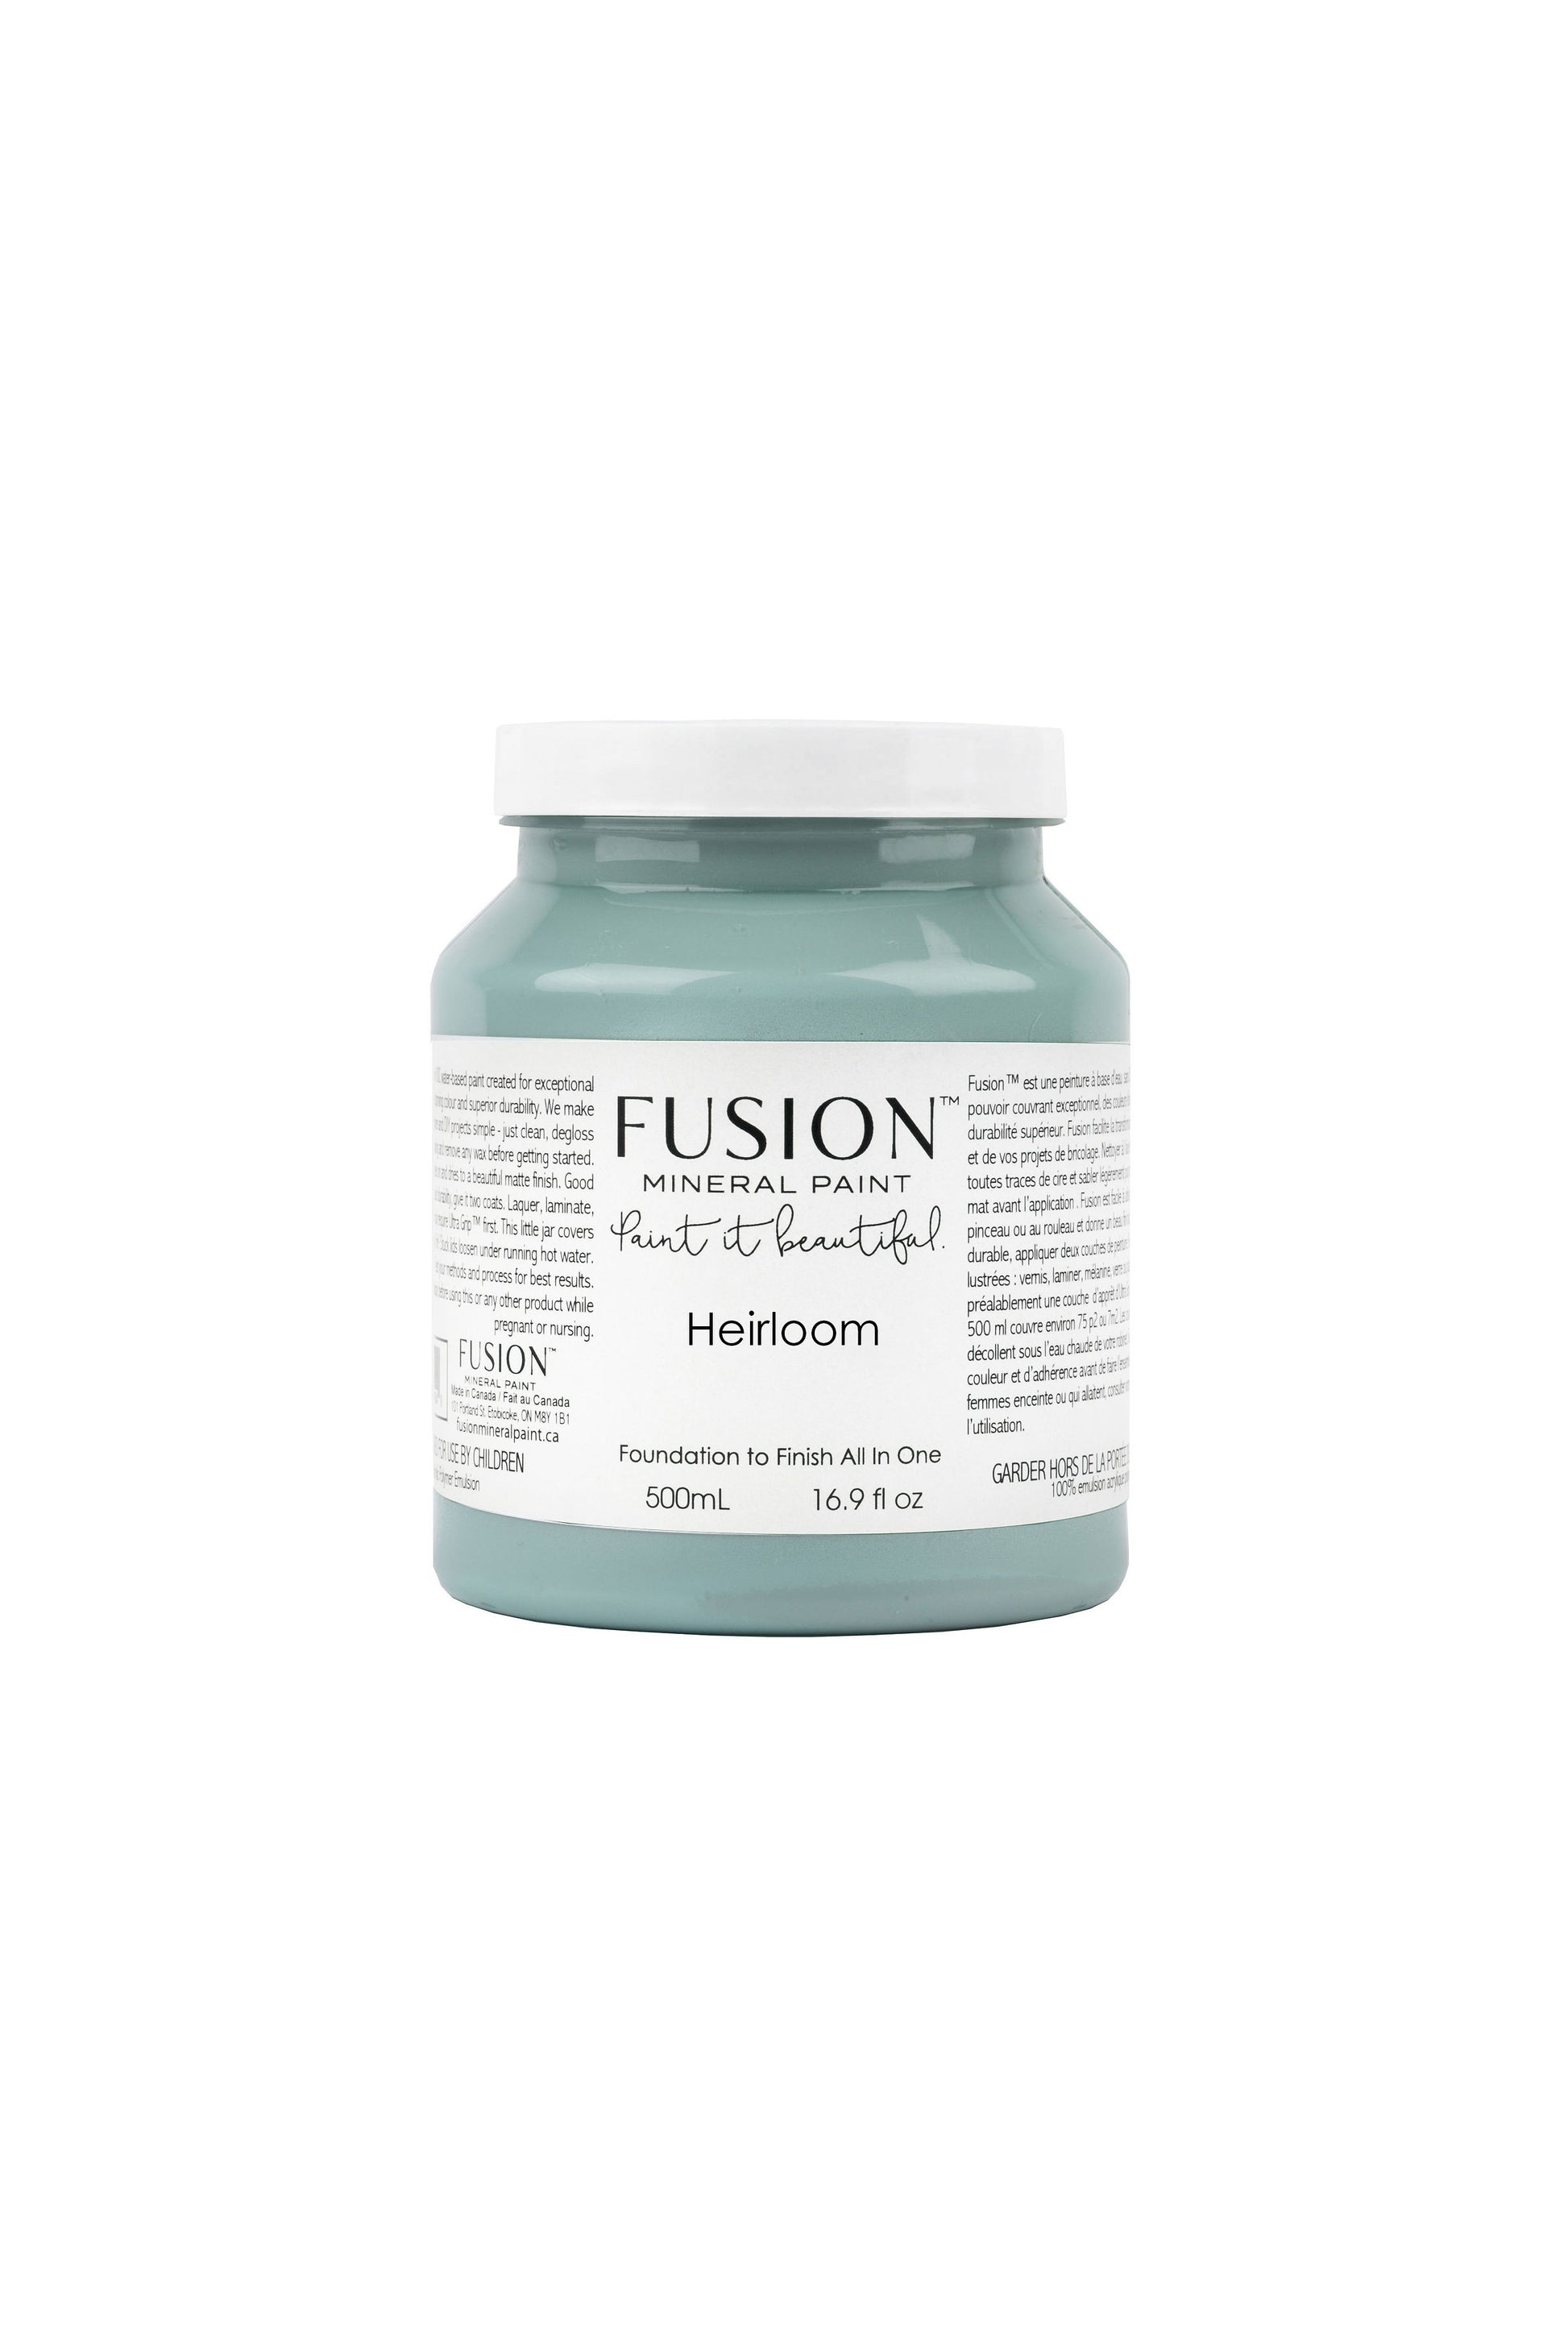  Heirloom Fusion Mineral Paint, Misty Blue Paint Color | 500ml Pint Size